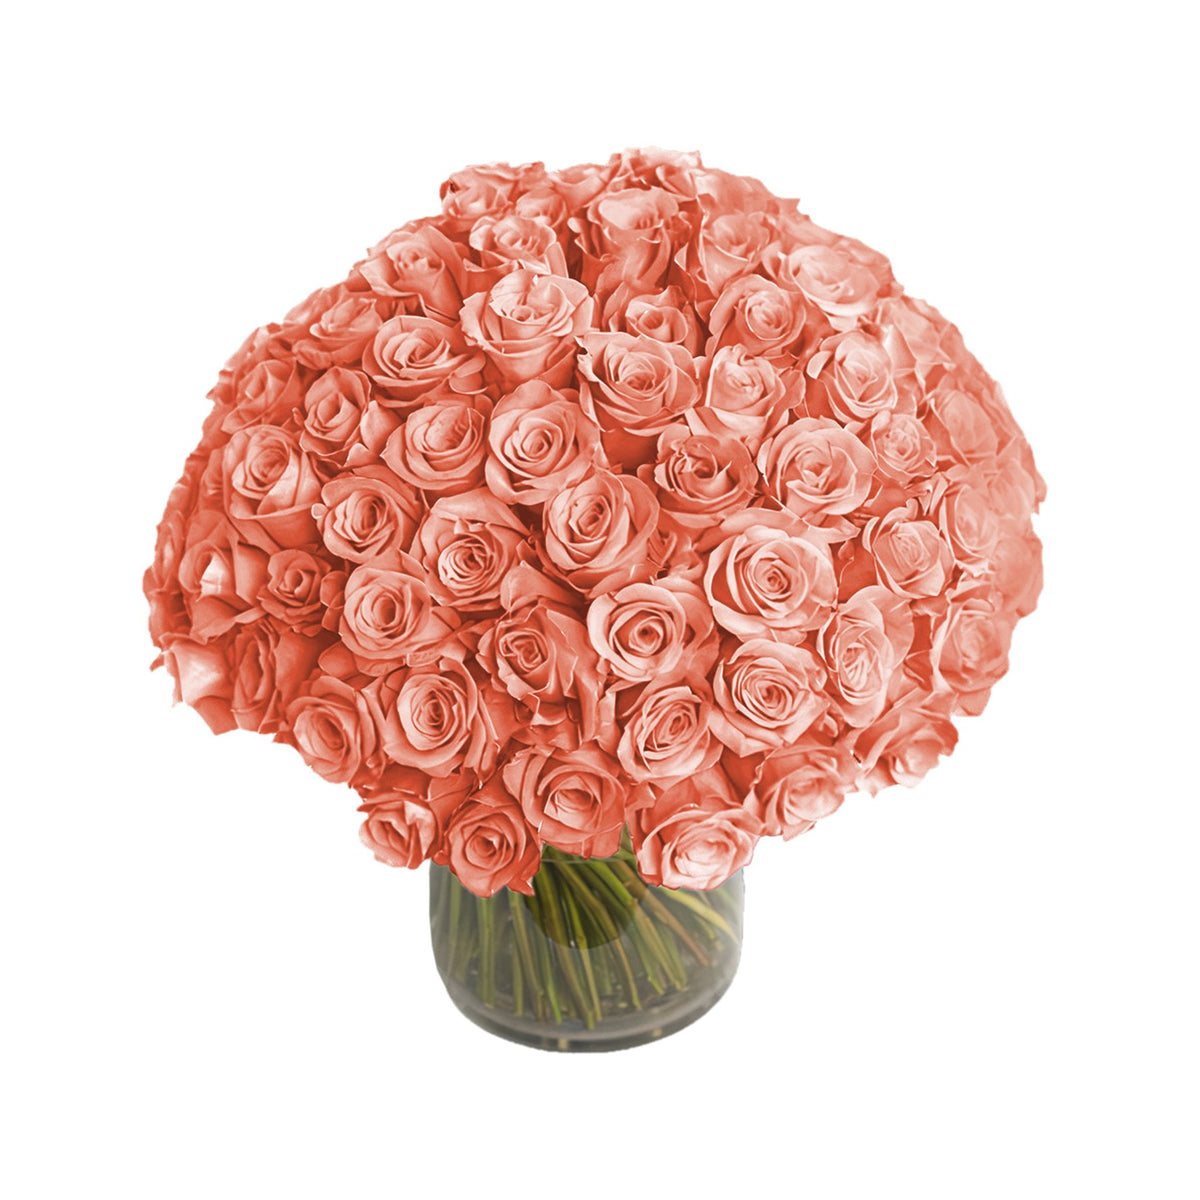 Fresh Roses in a Crystal Vase | Peach - 100 Roses - Roses